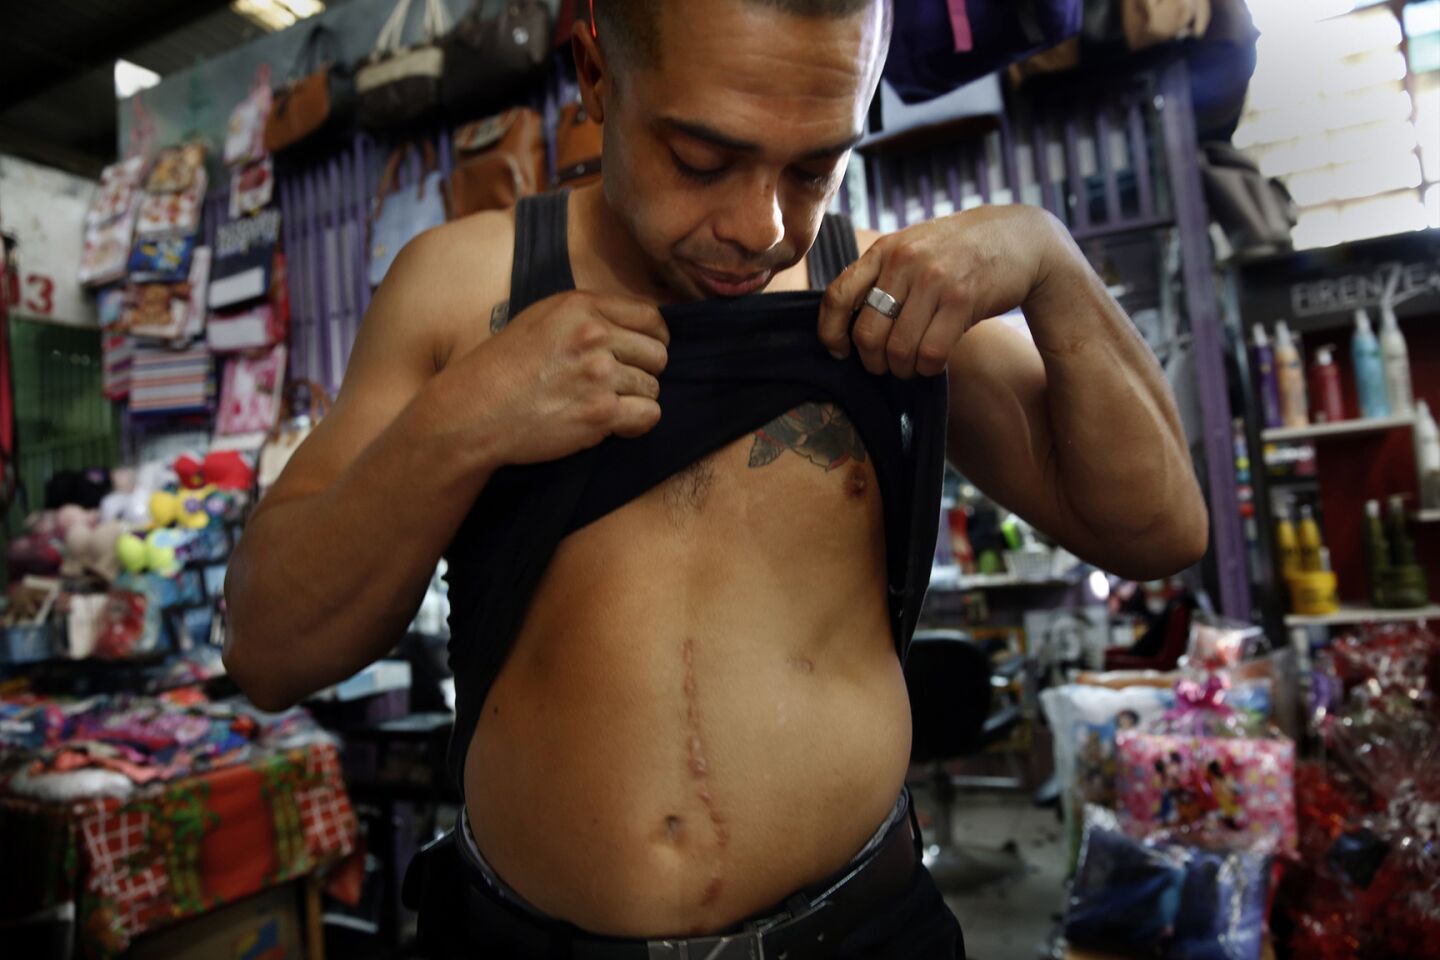 Life in El Salvador after deportation